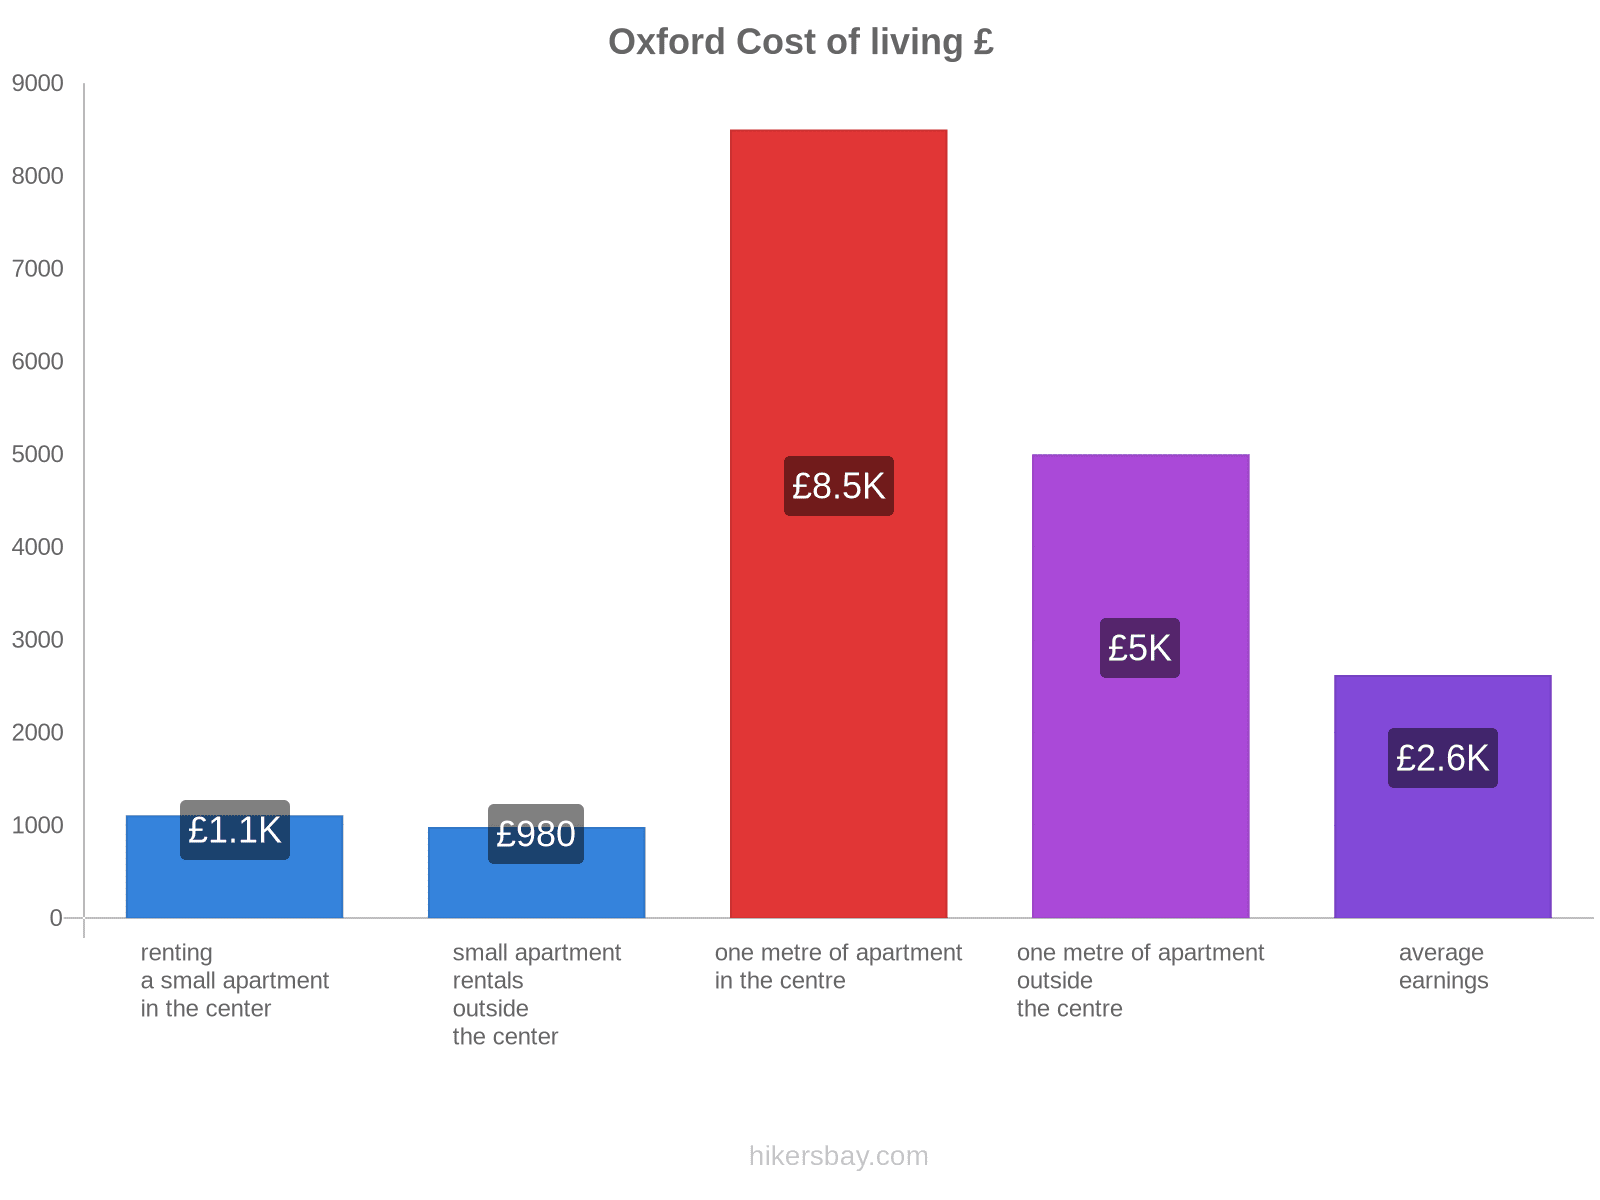 Oxford cost of living hikersbay.com